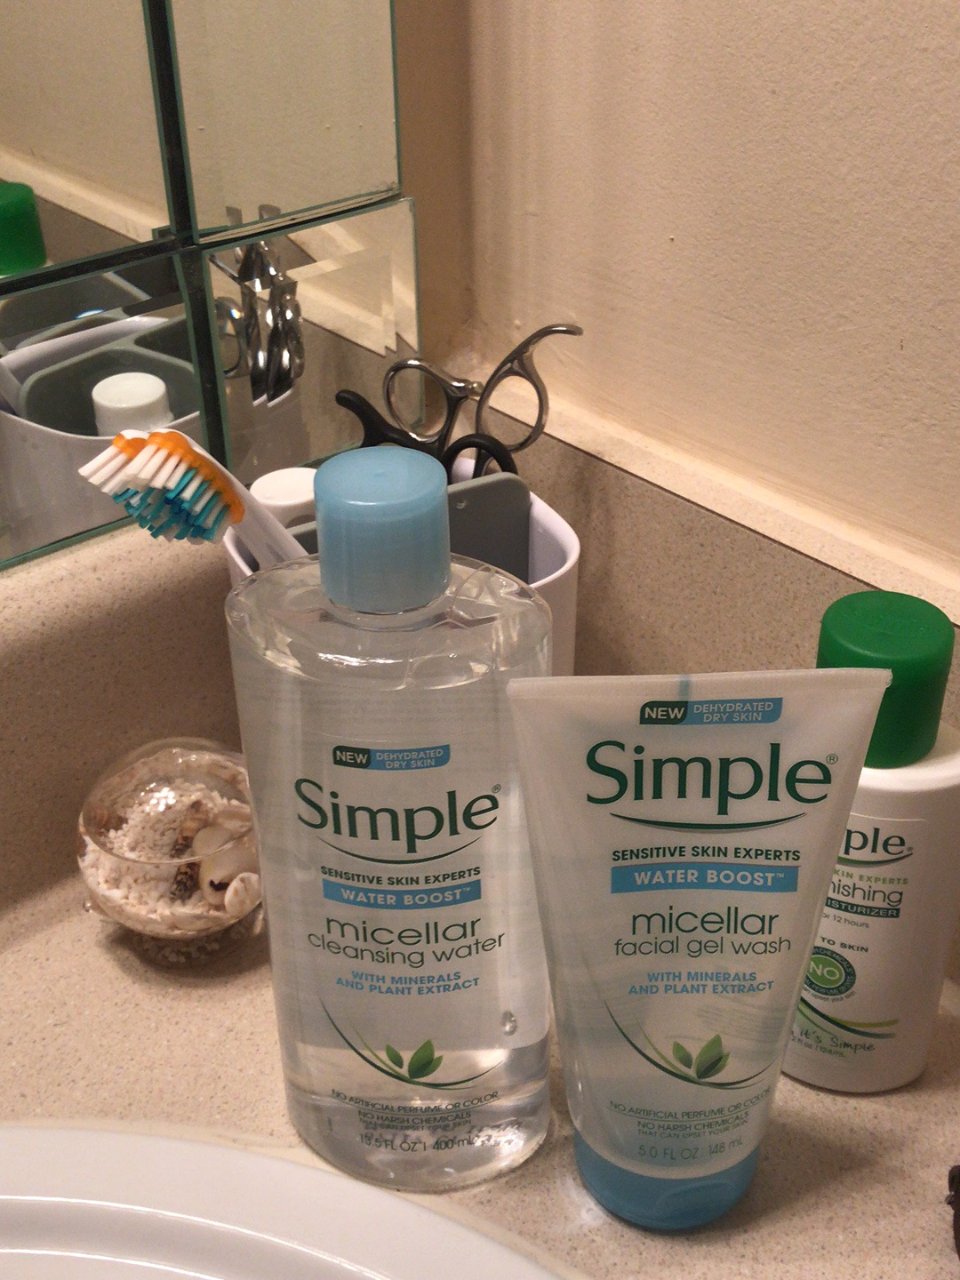 Simple,Simple,Simple,Simple Micellar Water,Simple face wash,Simple moisture lotion